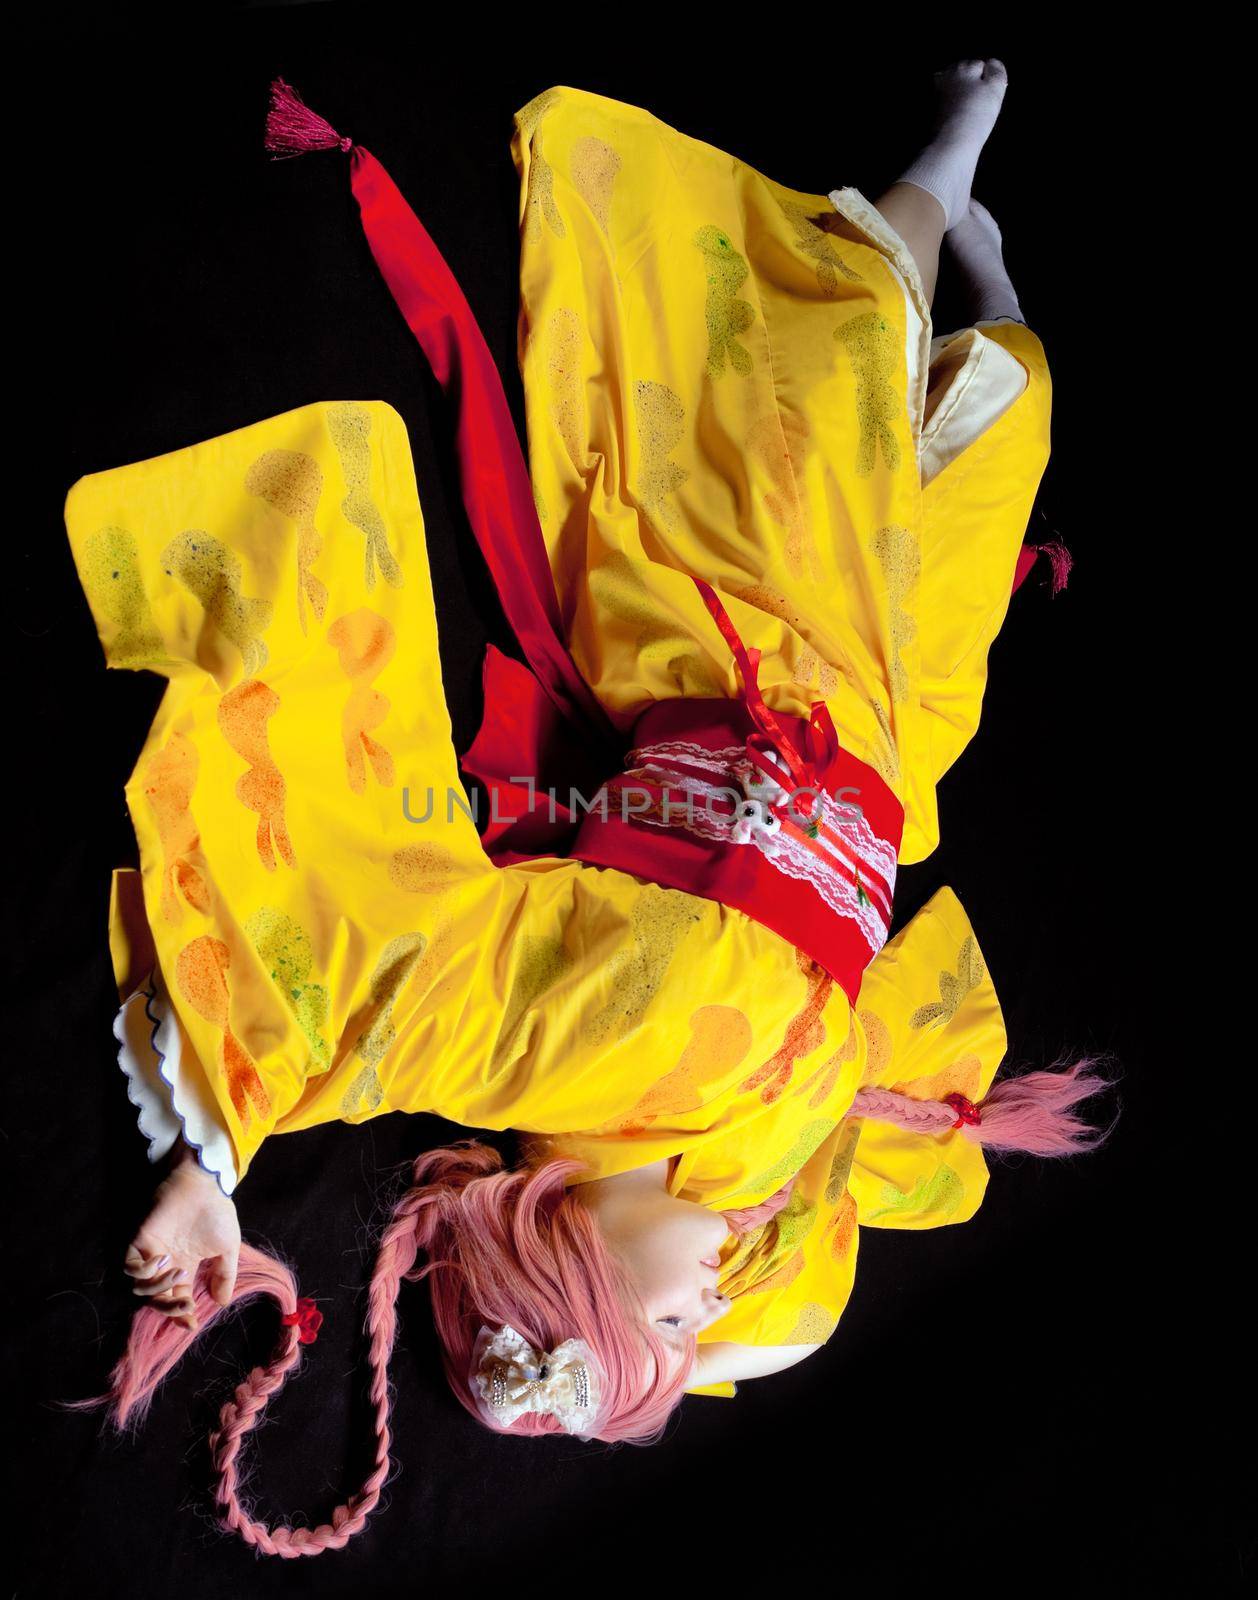 Portrait of young girl lay in yellow kimono cosplay costume